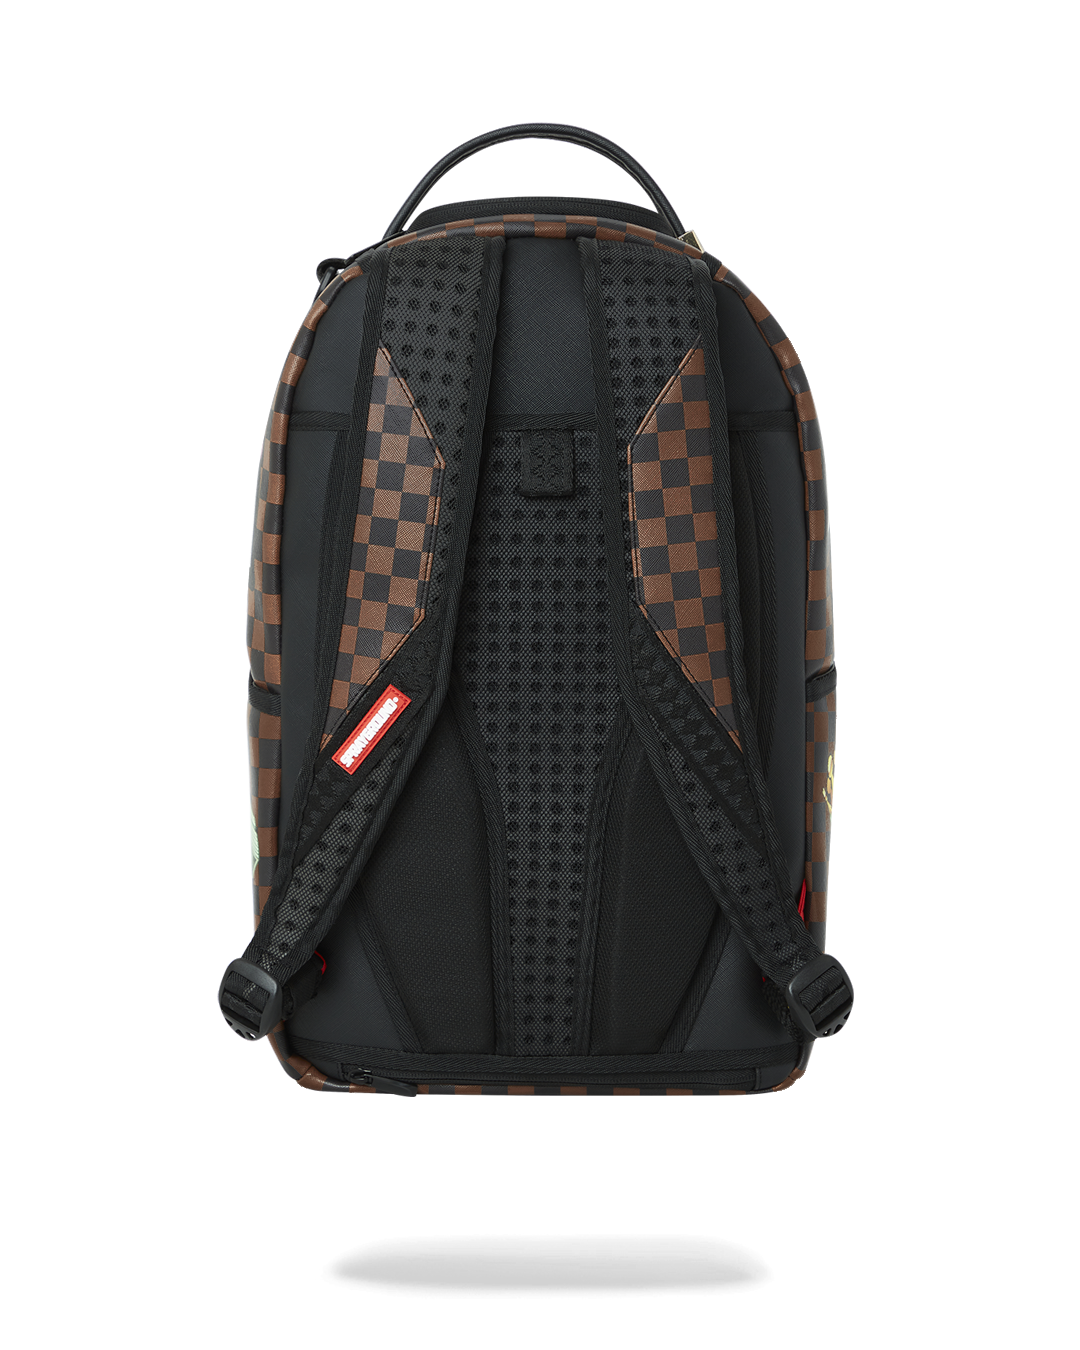 Backpack Shark Zipper Bag Leather, backpack, zipper, textile, leather png